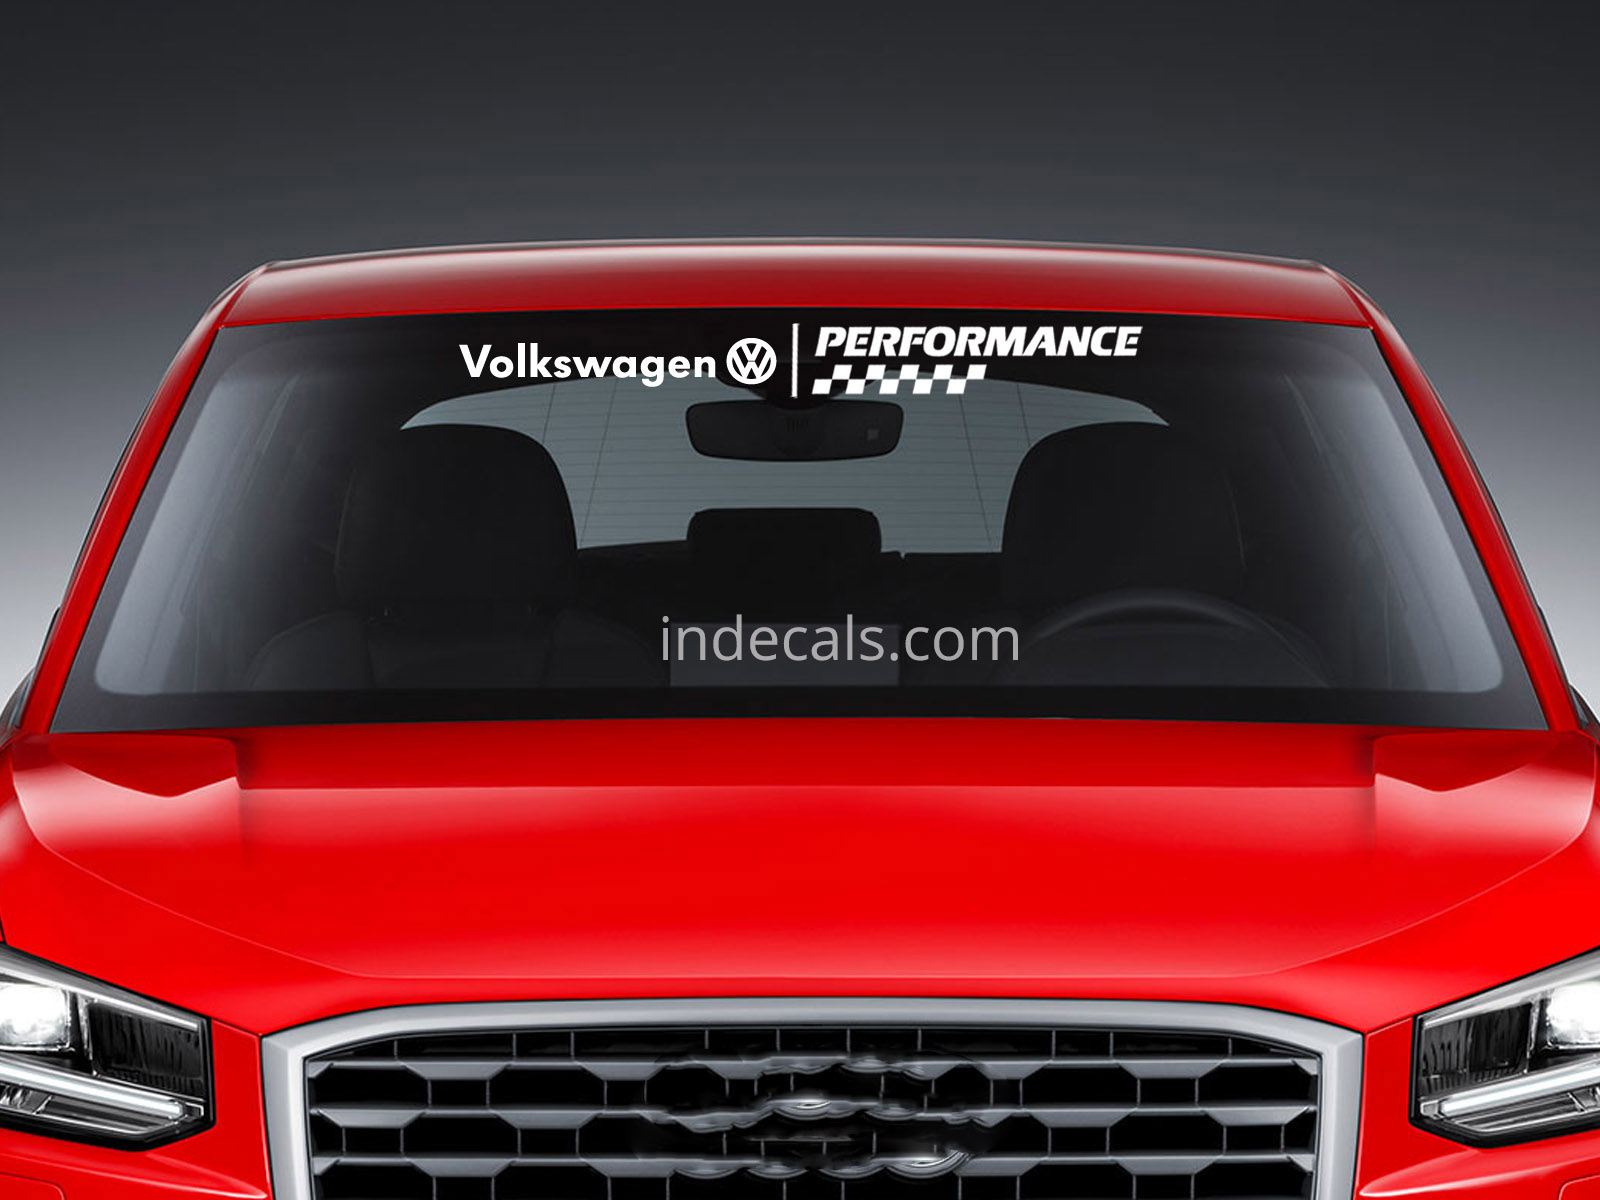 1 x Volkswagen Performance Sticker for Windshield or Back Window - White